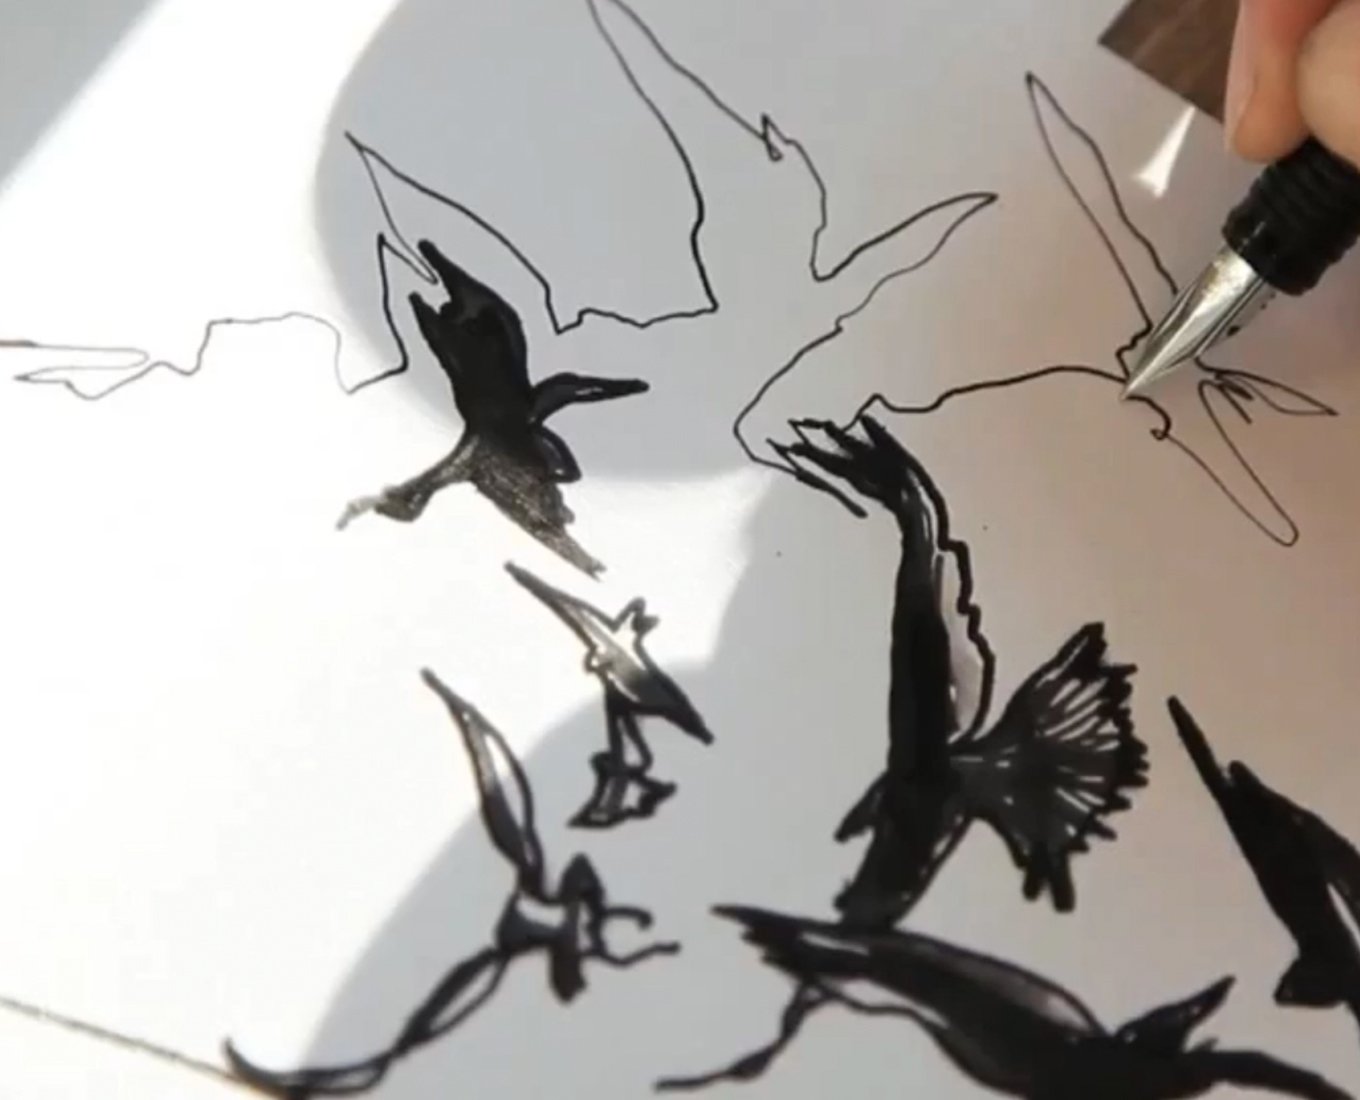 Closeup of a pen nib drawing birds in flight.